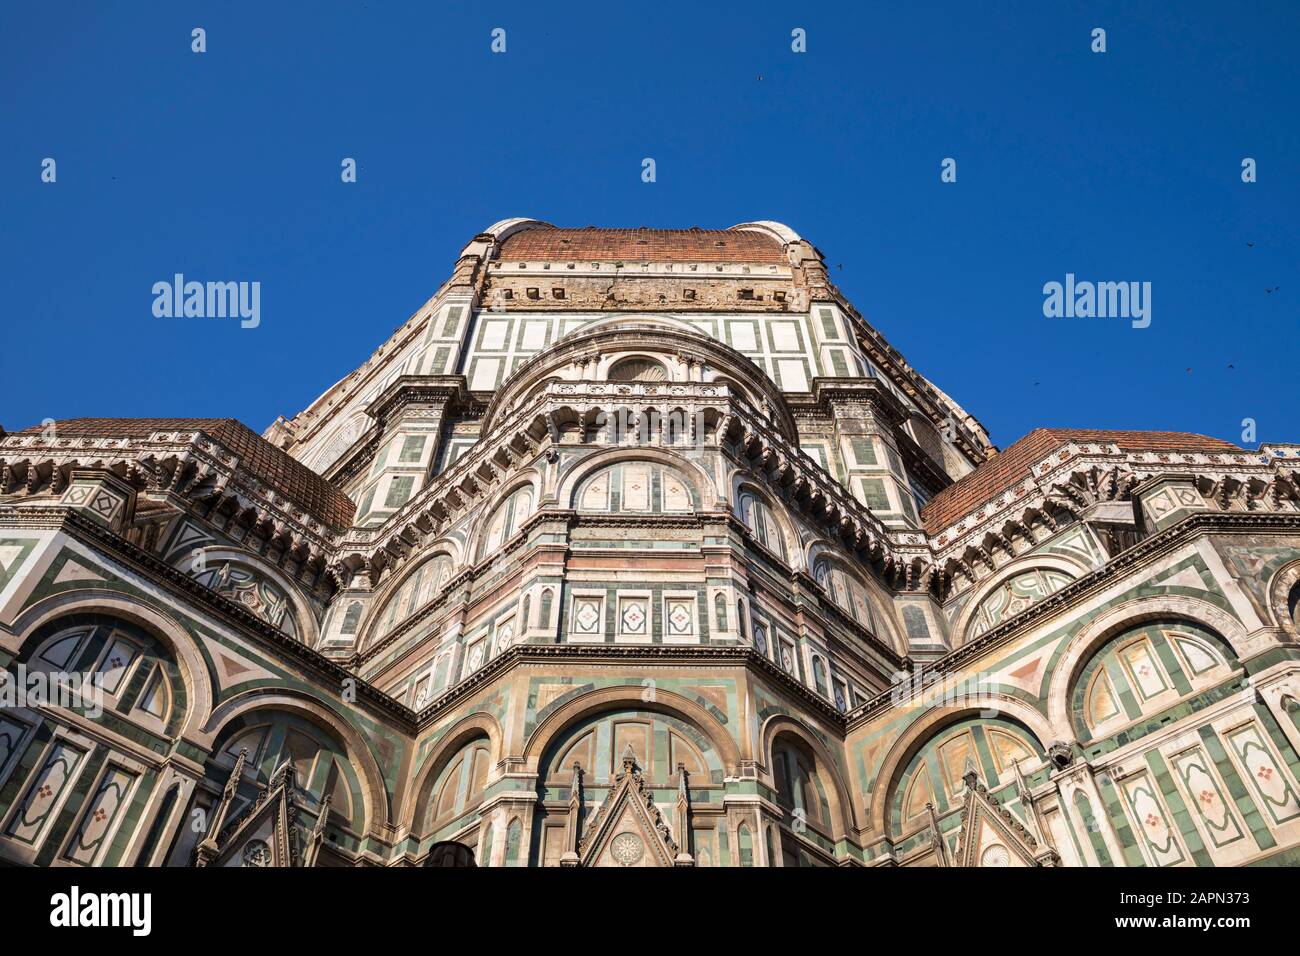 Basilica di Santa Maria del Fiore / Basilica of Saint Mary of the Flower (detail), Florence, Italy. Stock Photo